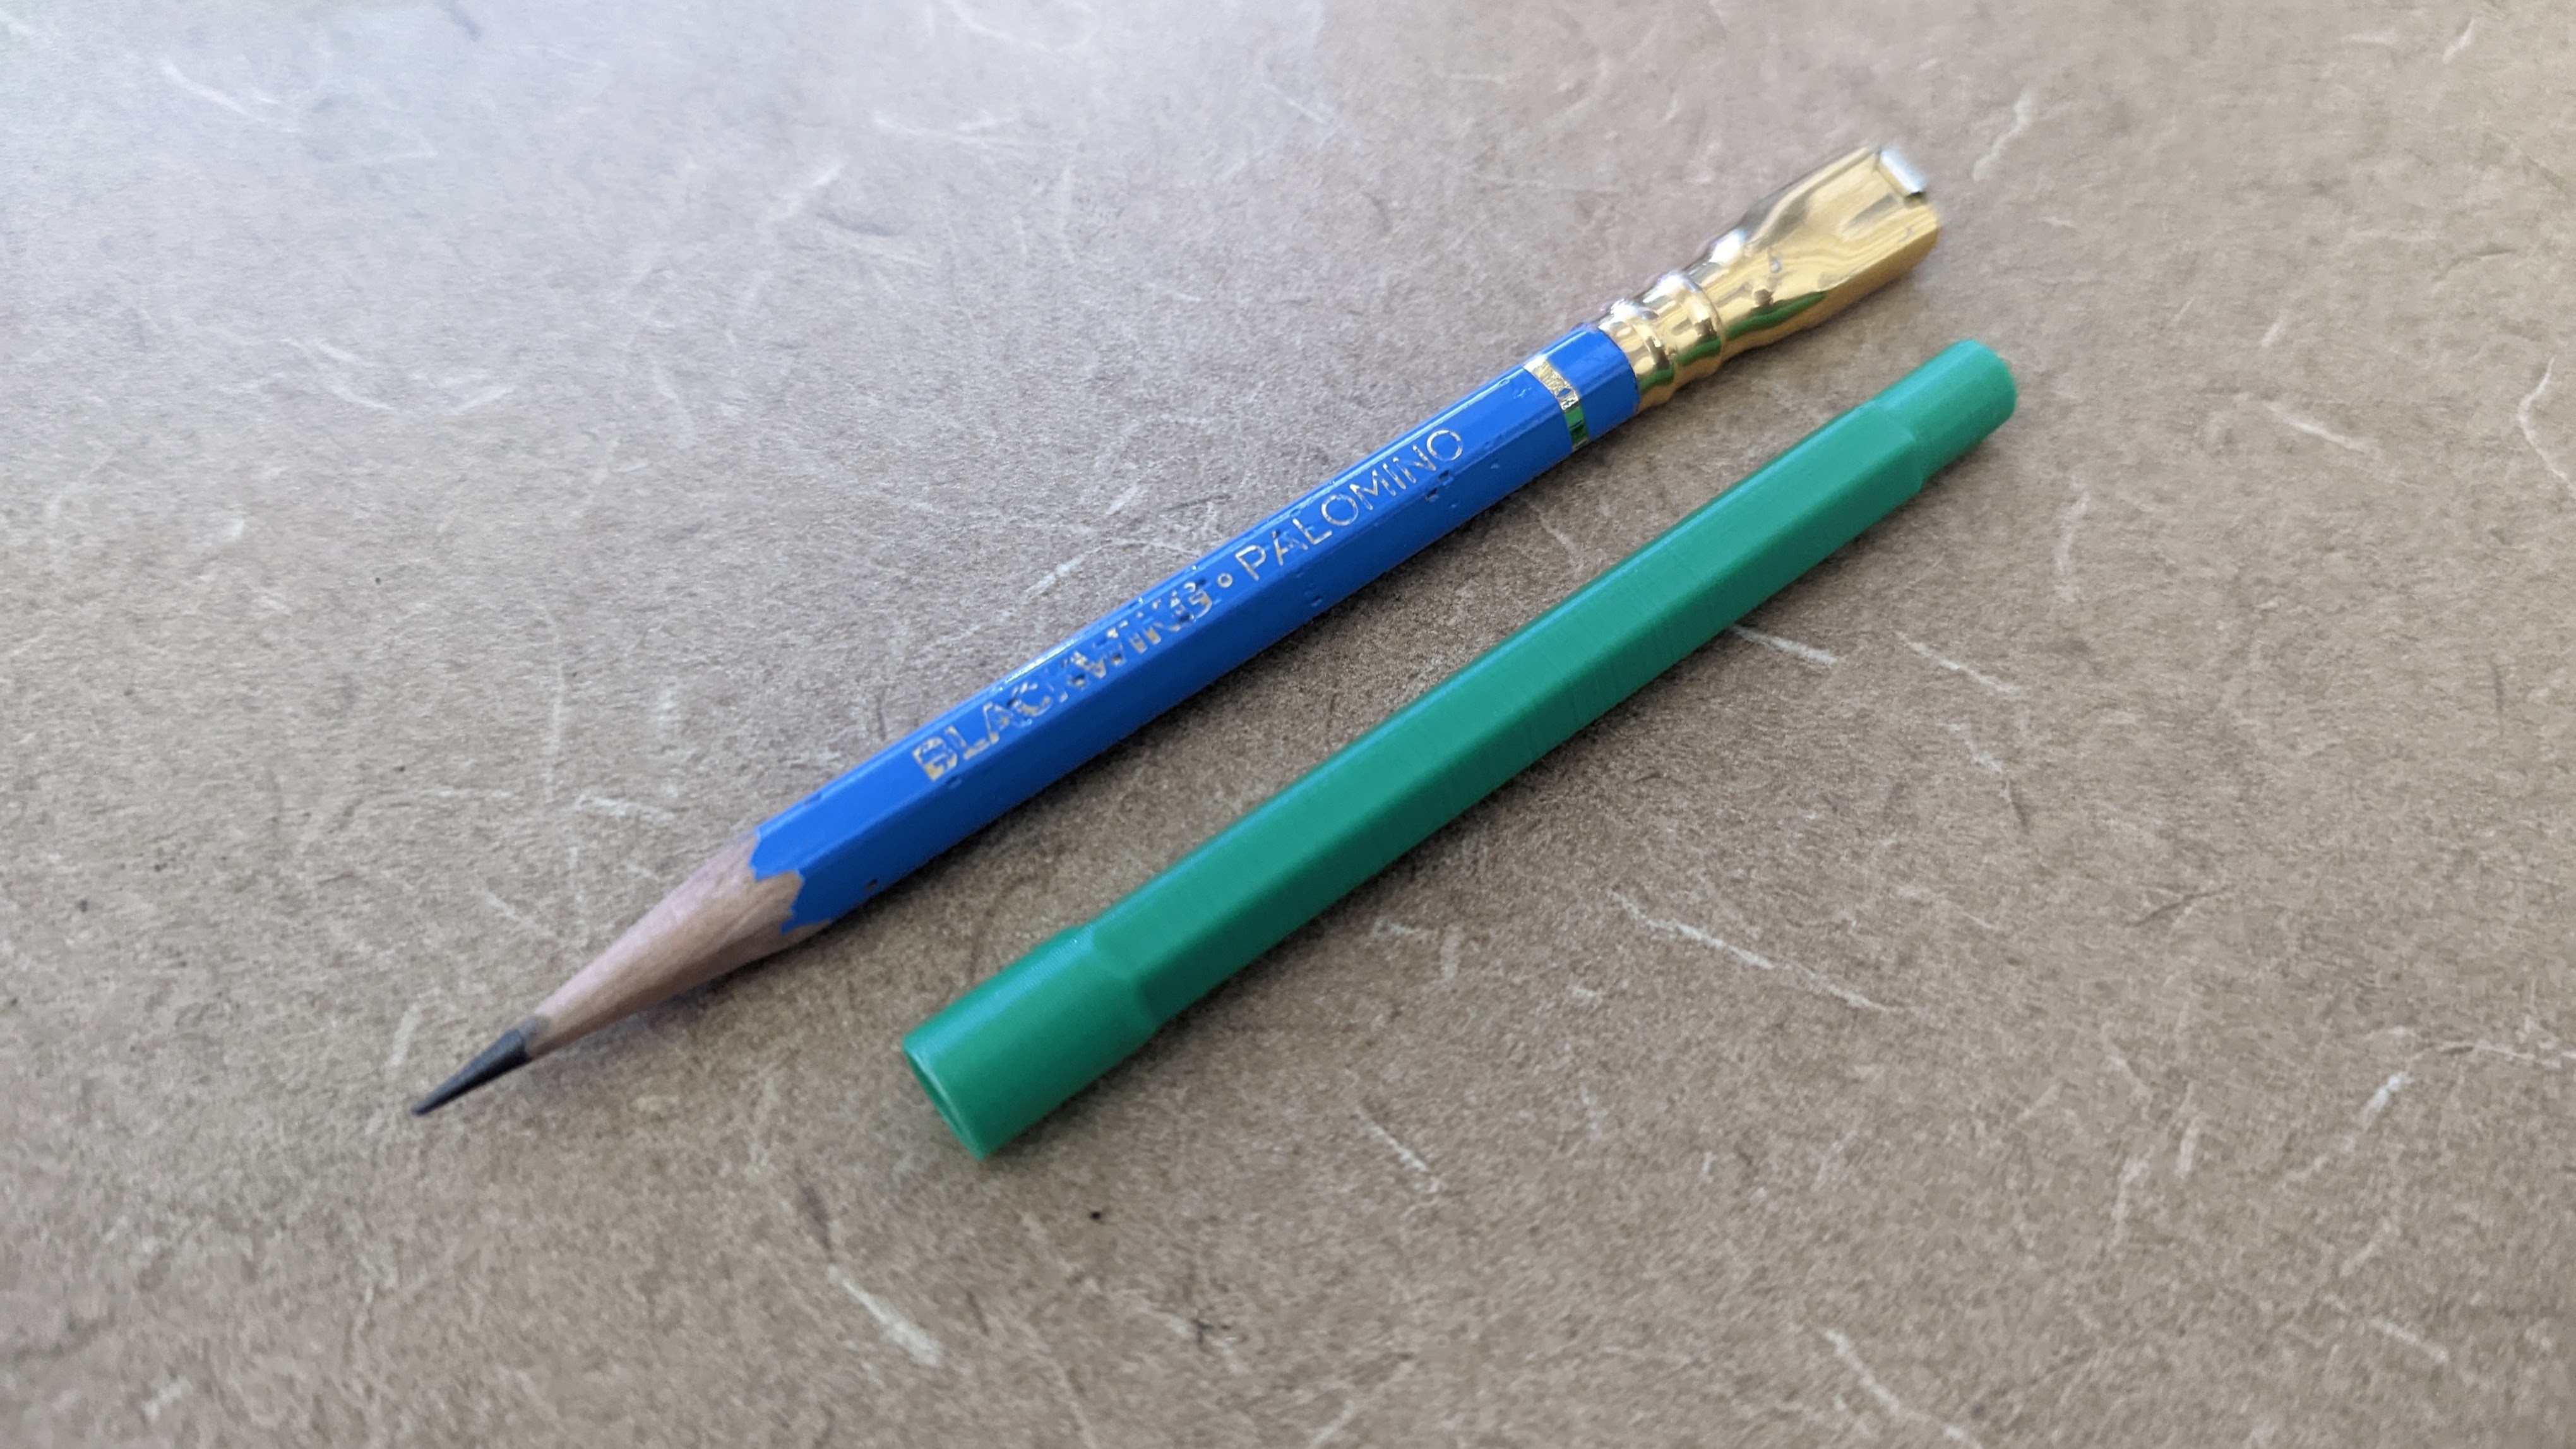 65mm Pencil Extension